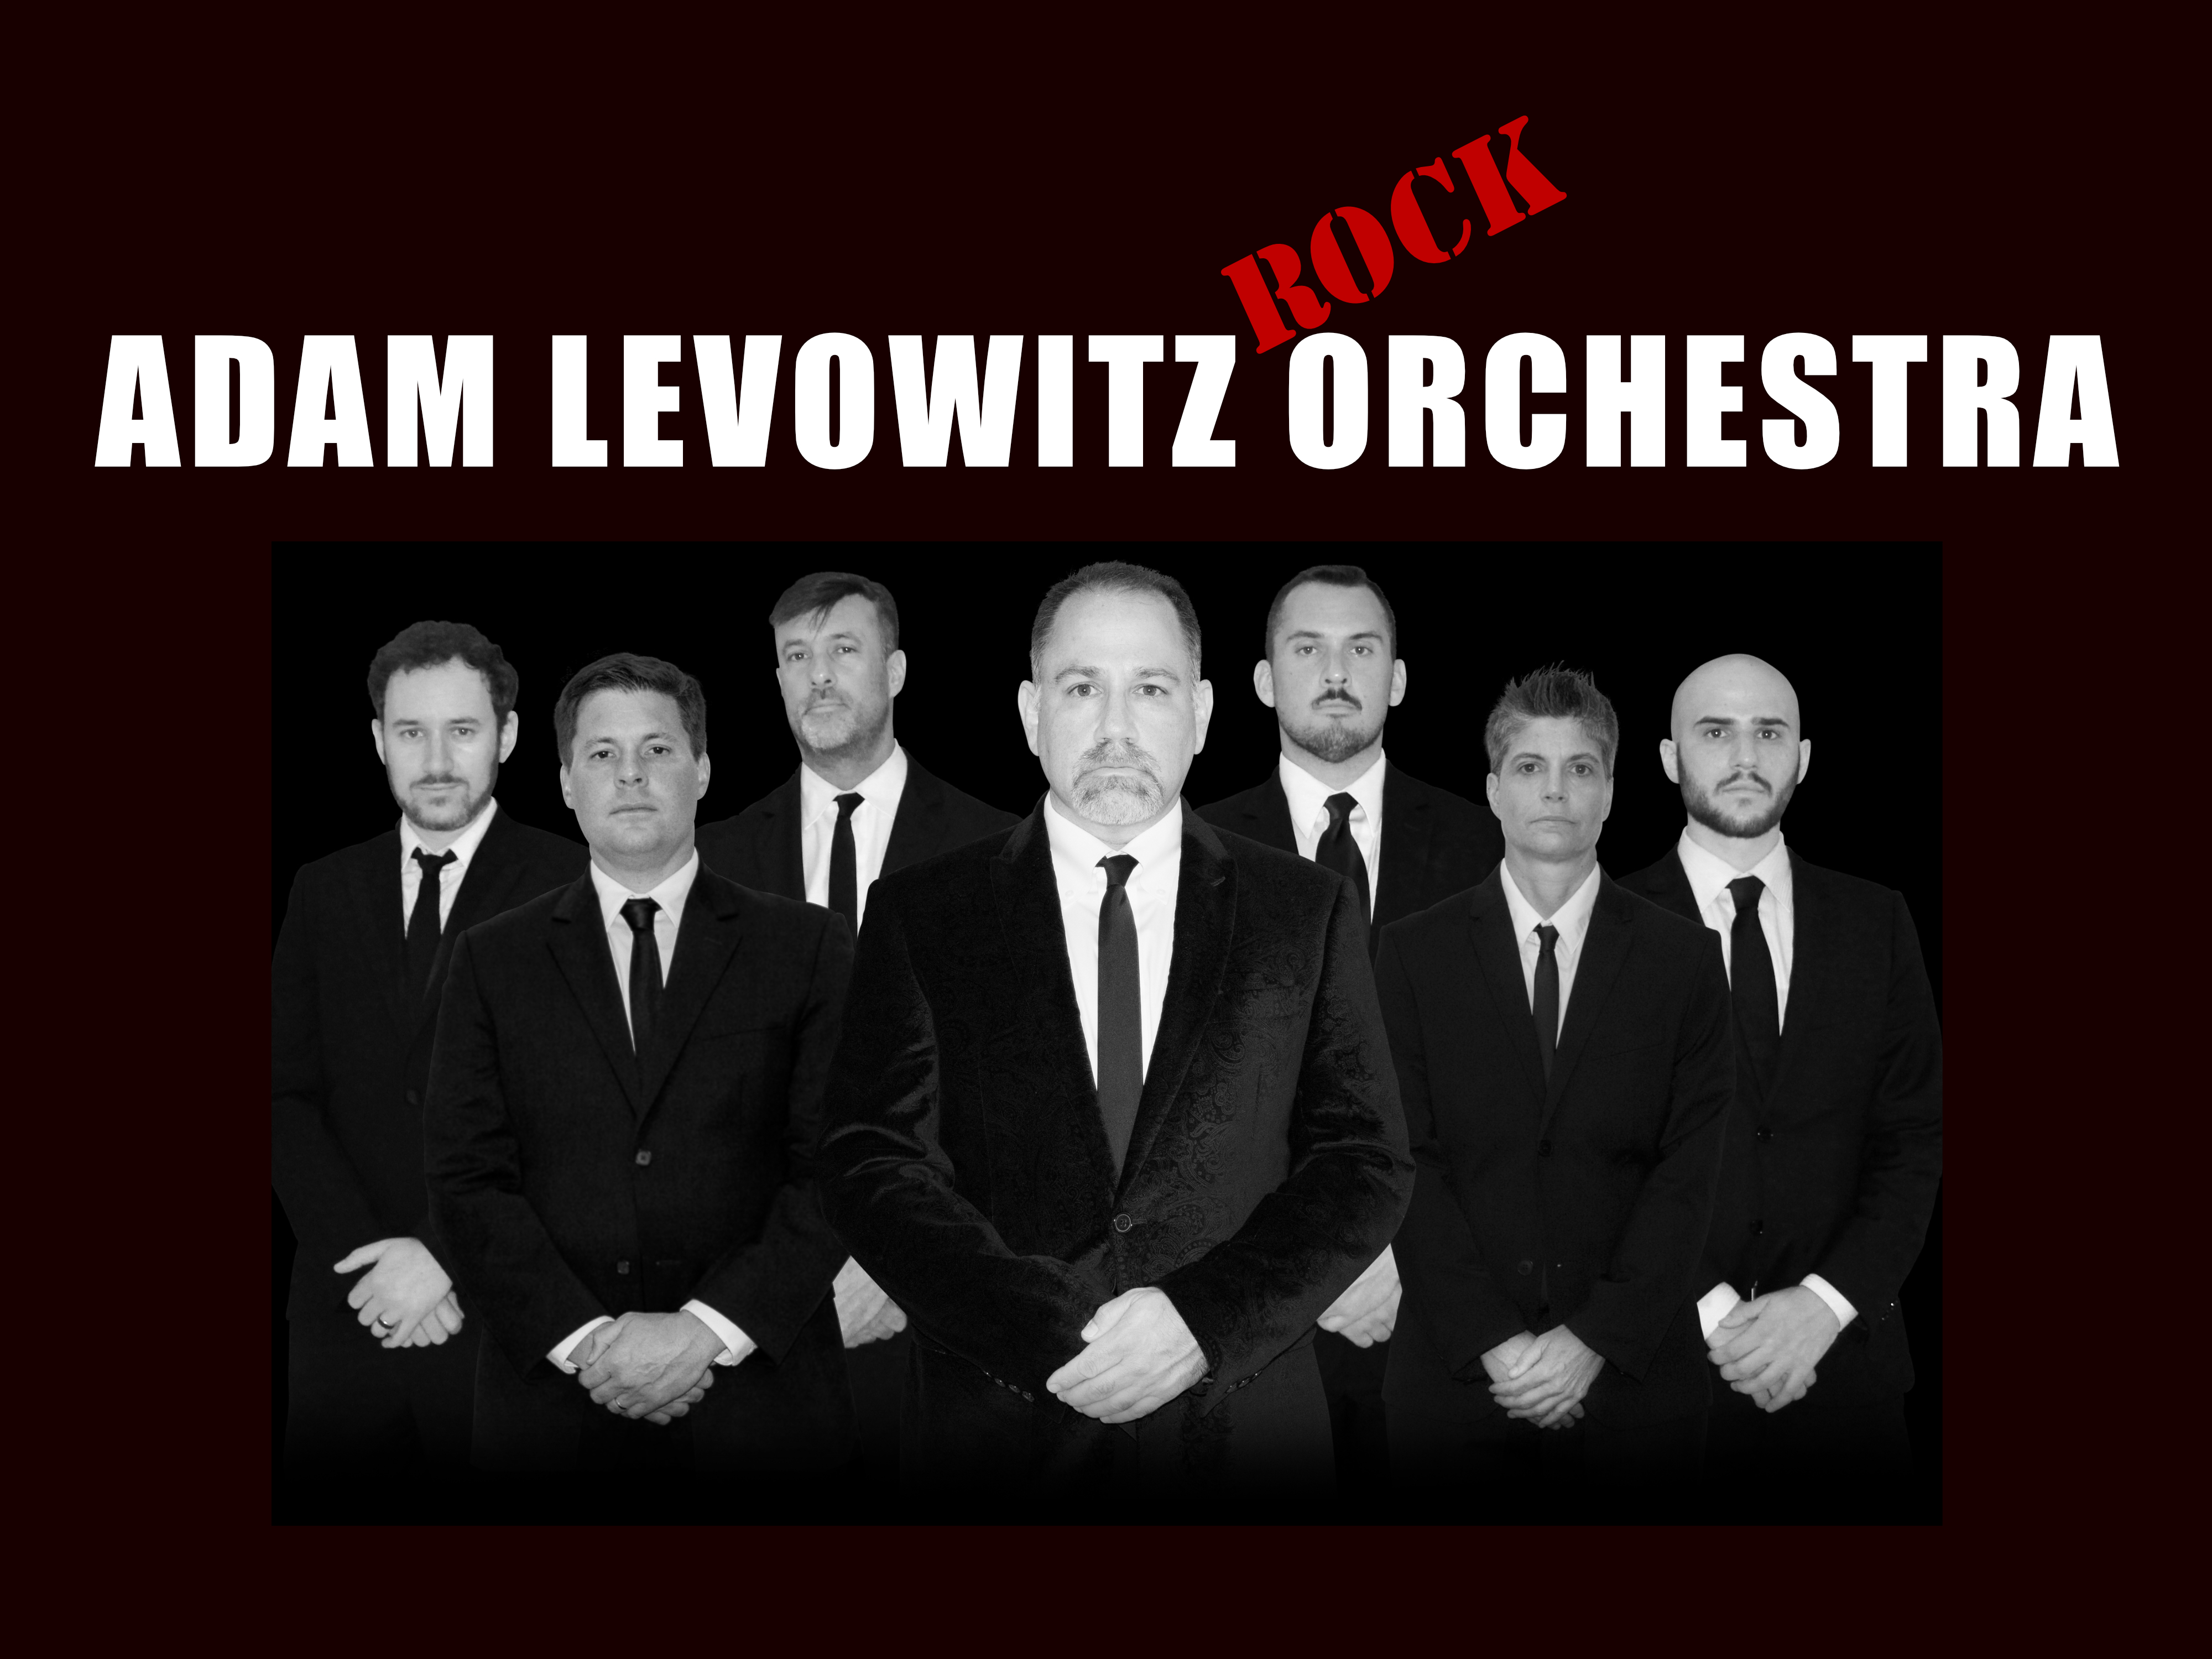 The Adam Levowitz Rock Orchestra